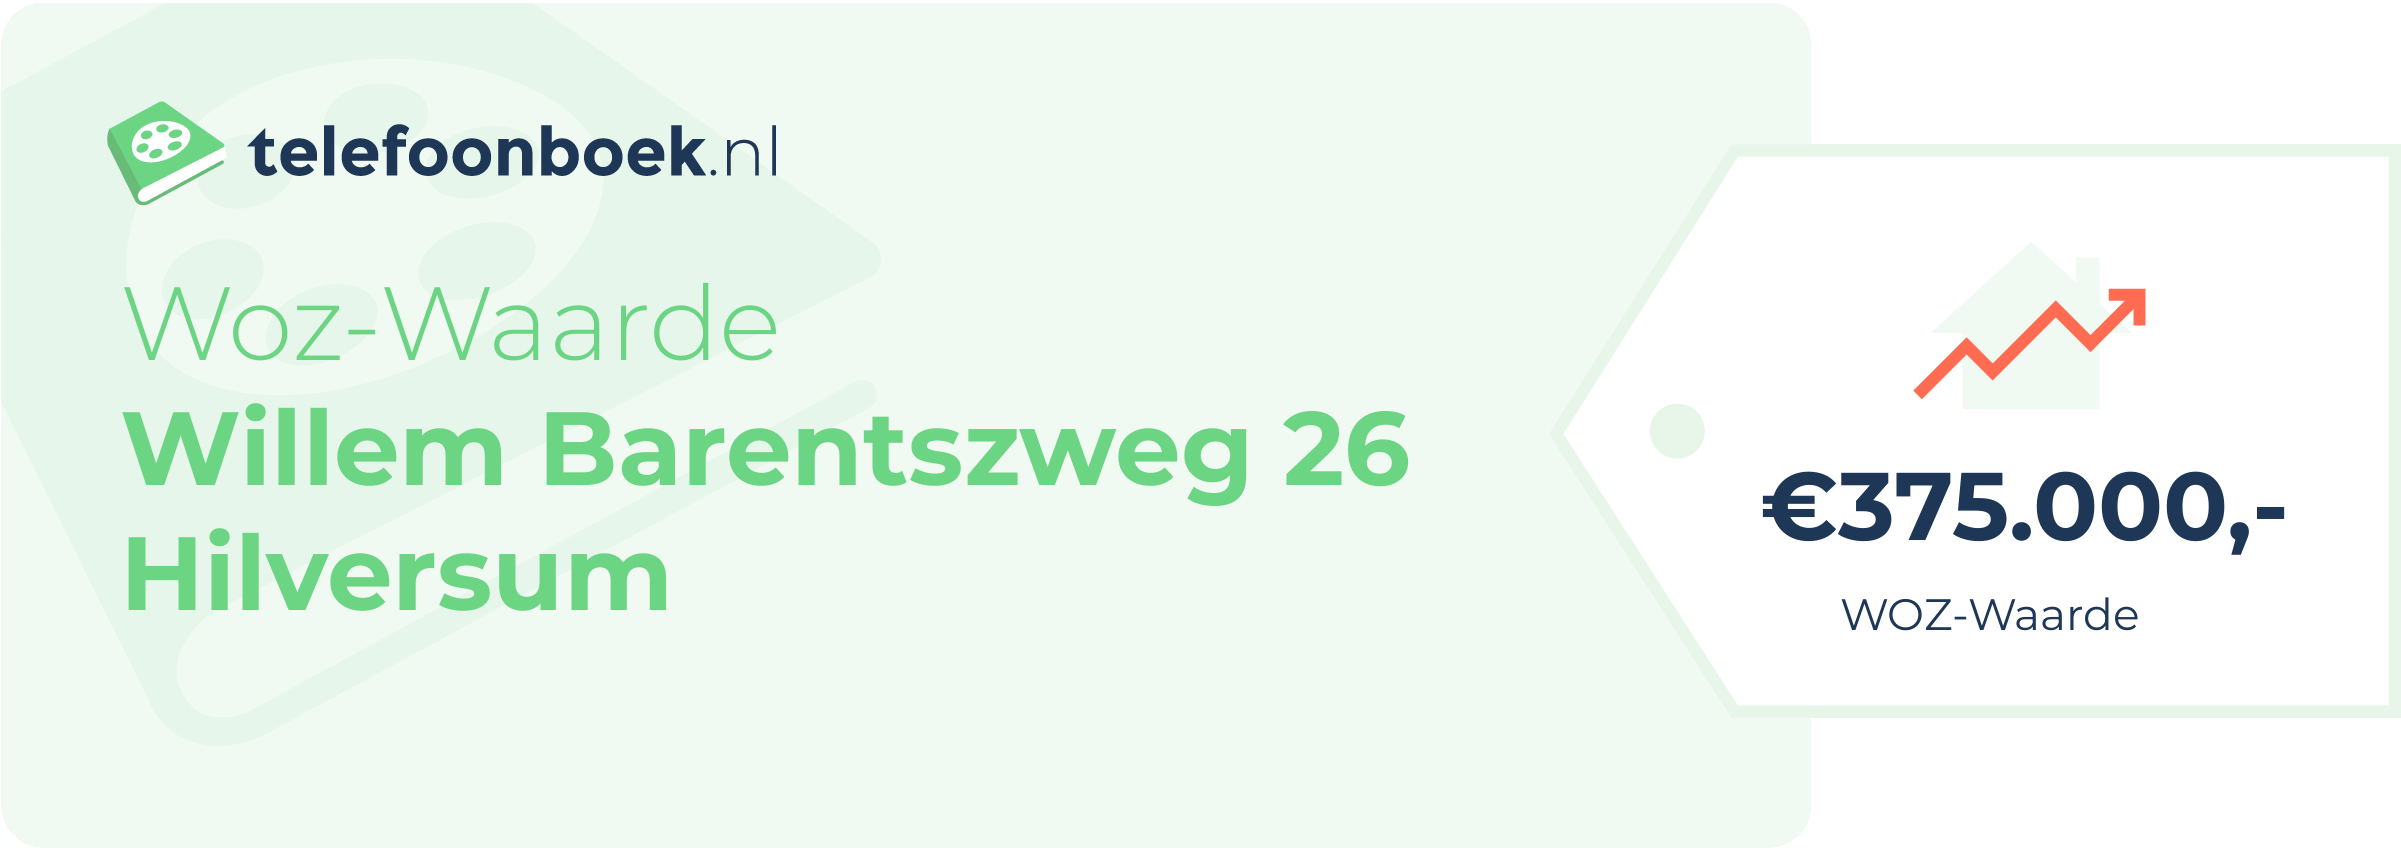 WOZ-waarde Willem Barentszweg 26 Hilversum